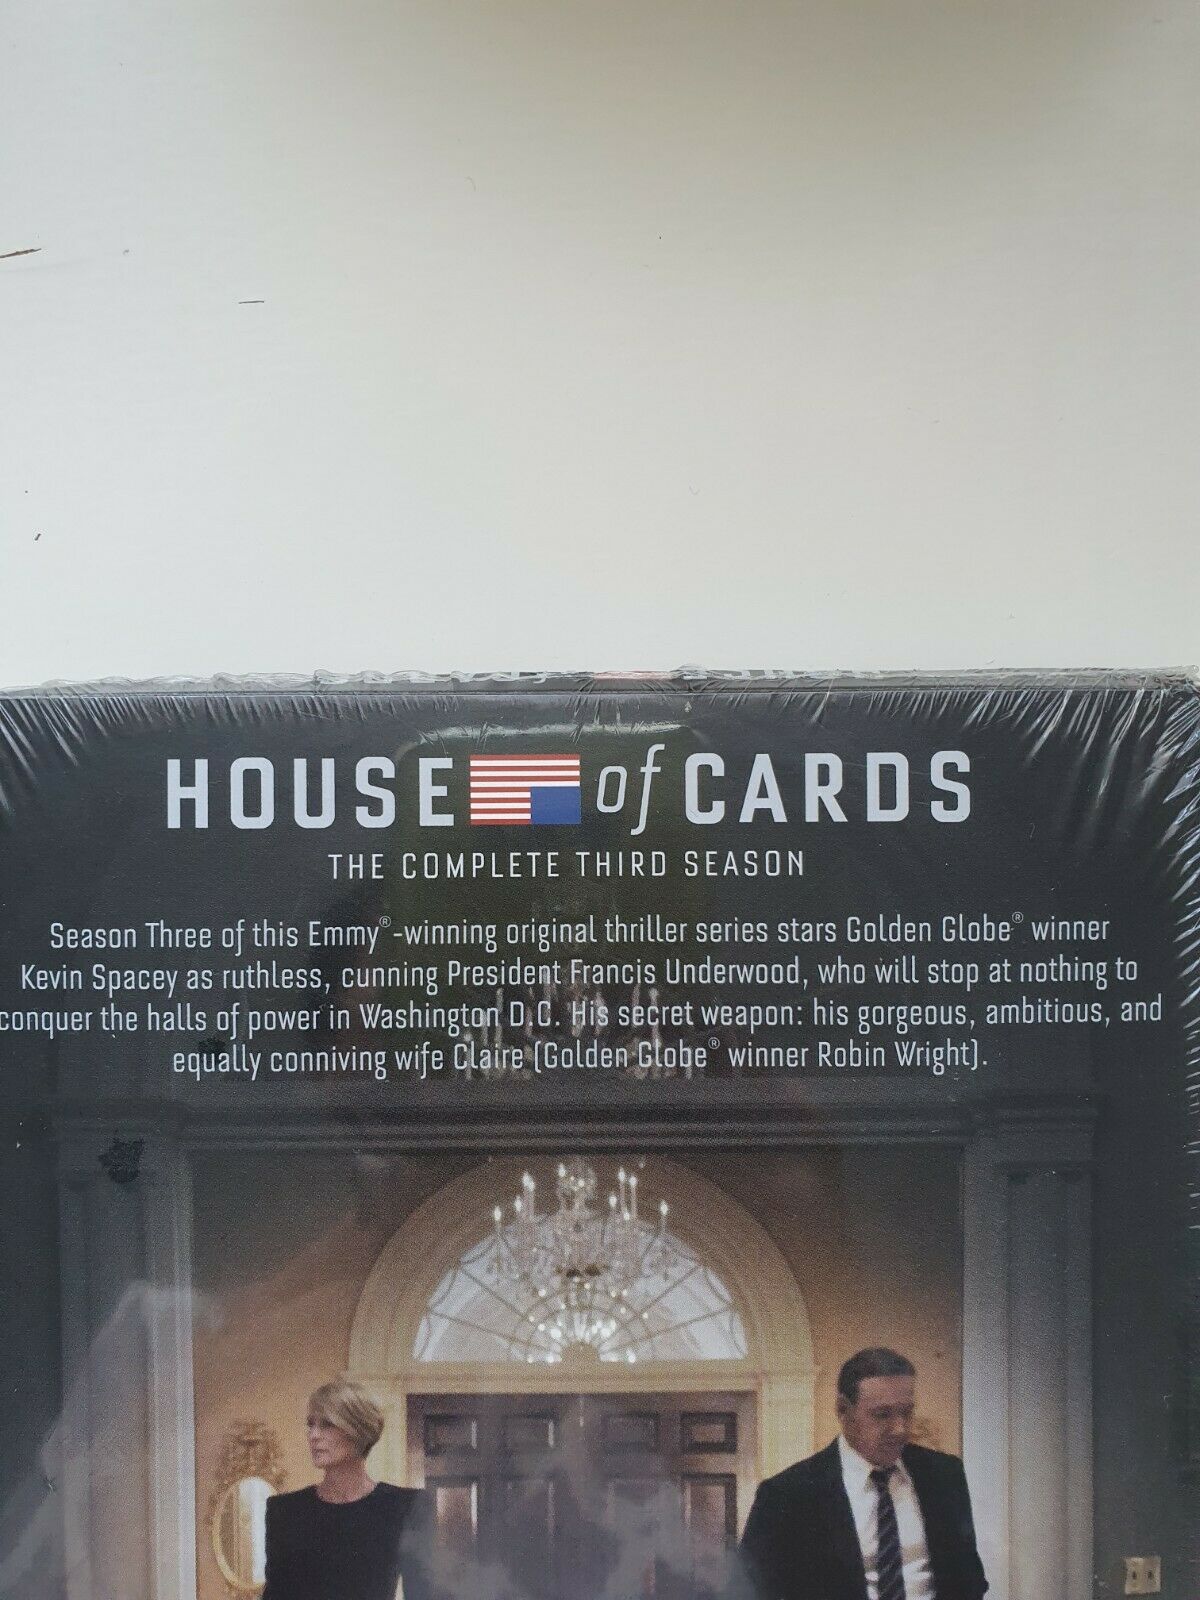 5050350619815 House of Cards – Season 3 DVD +UV (2015) 